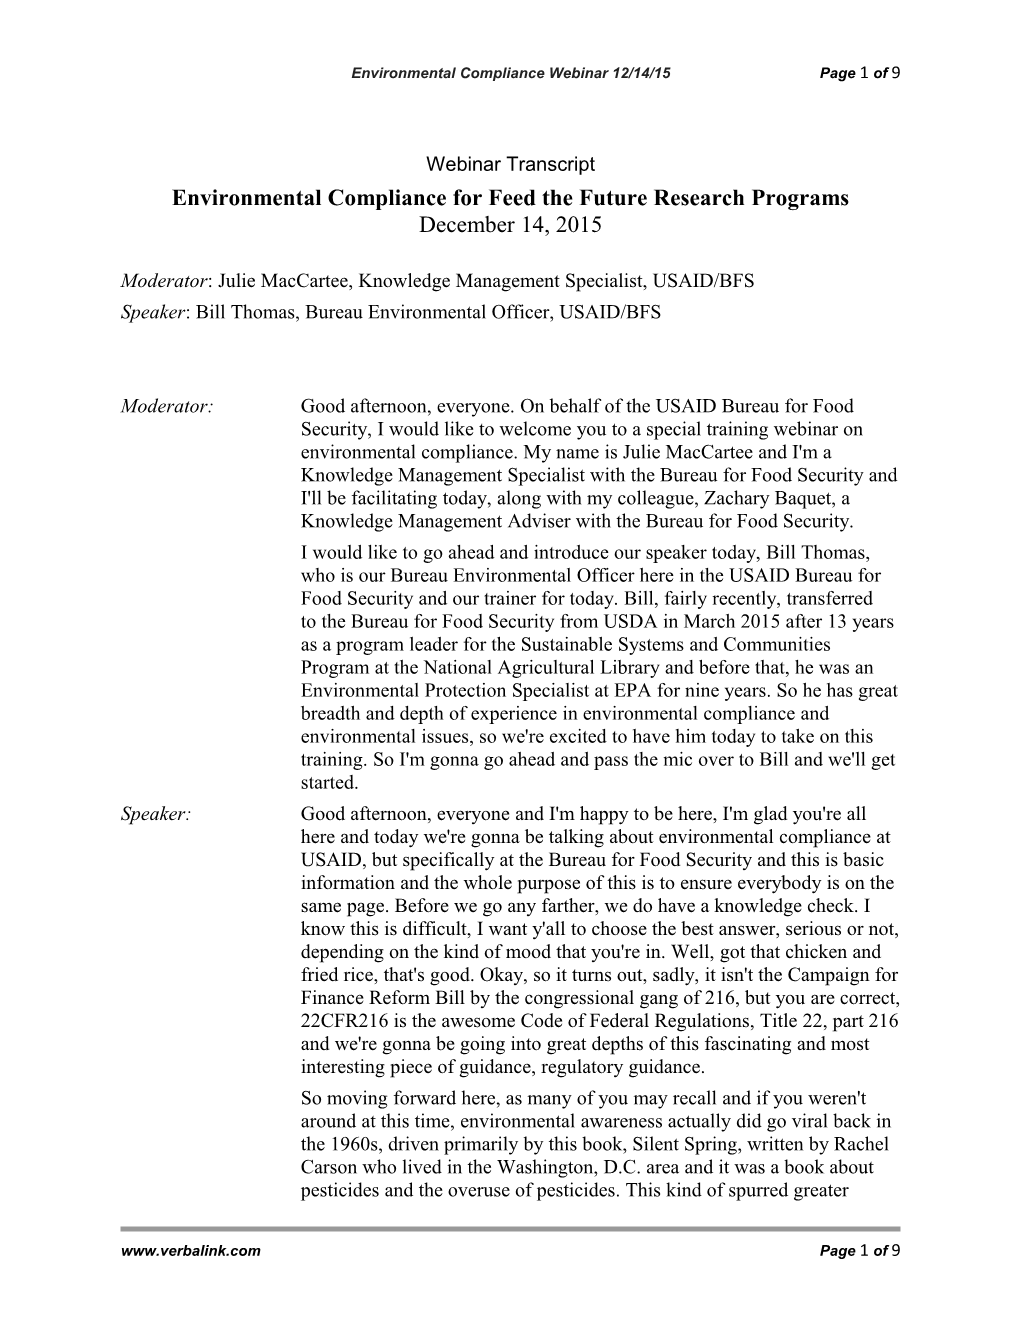 Environmental Compliance Presentation 121415